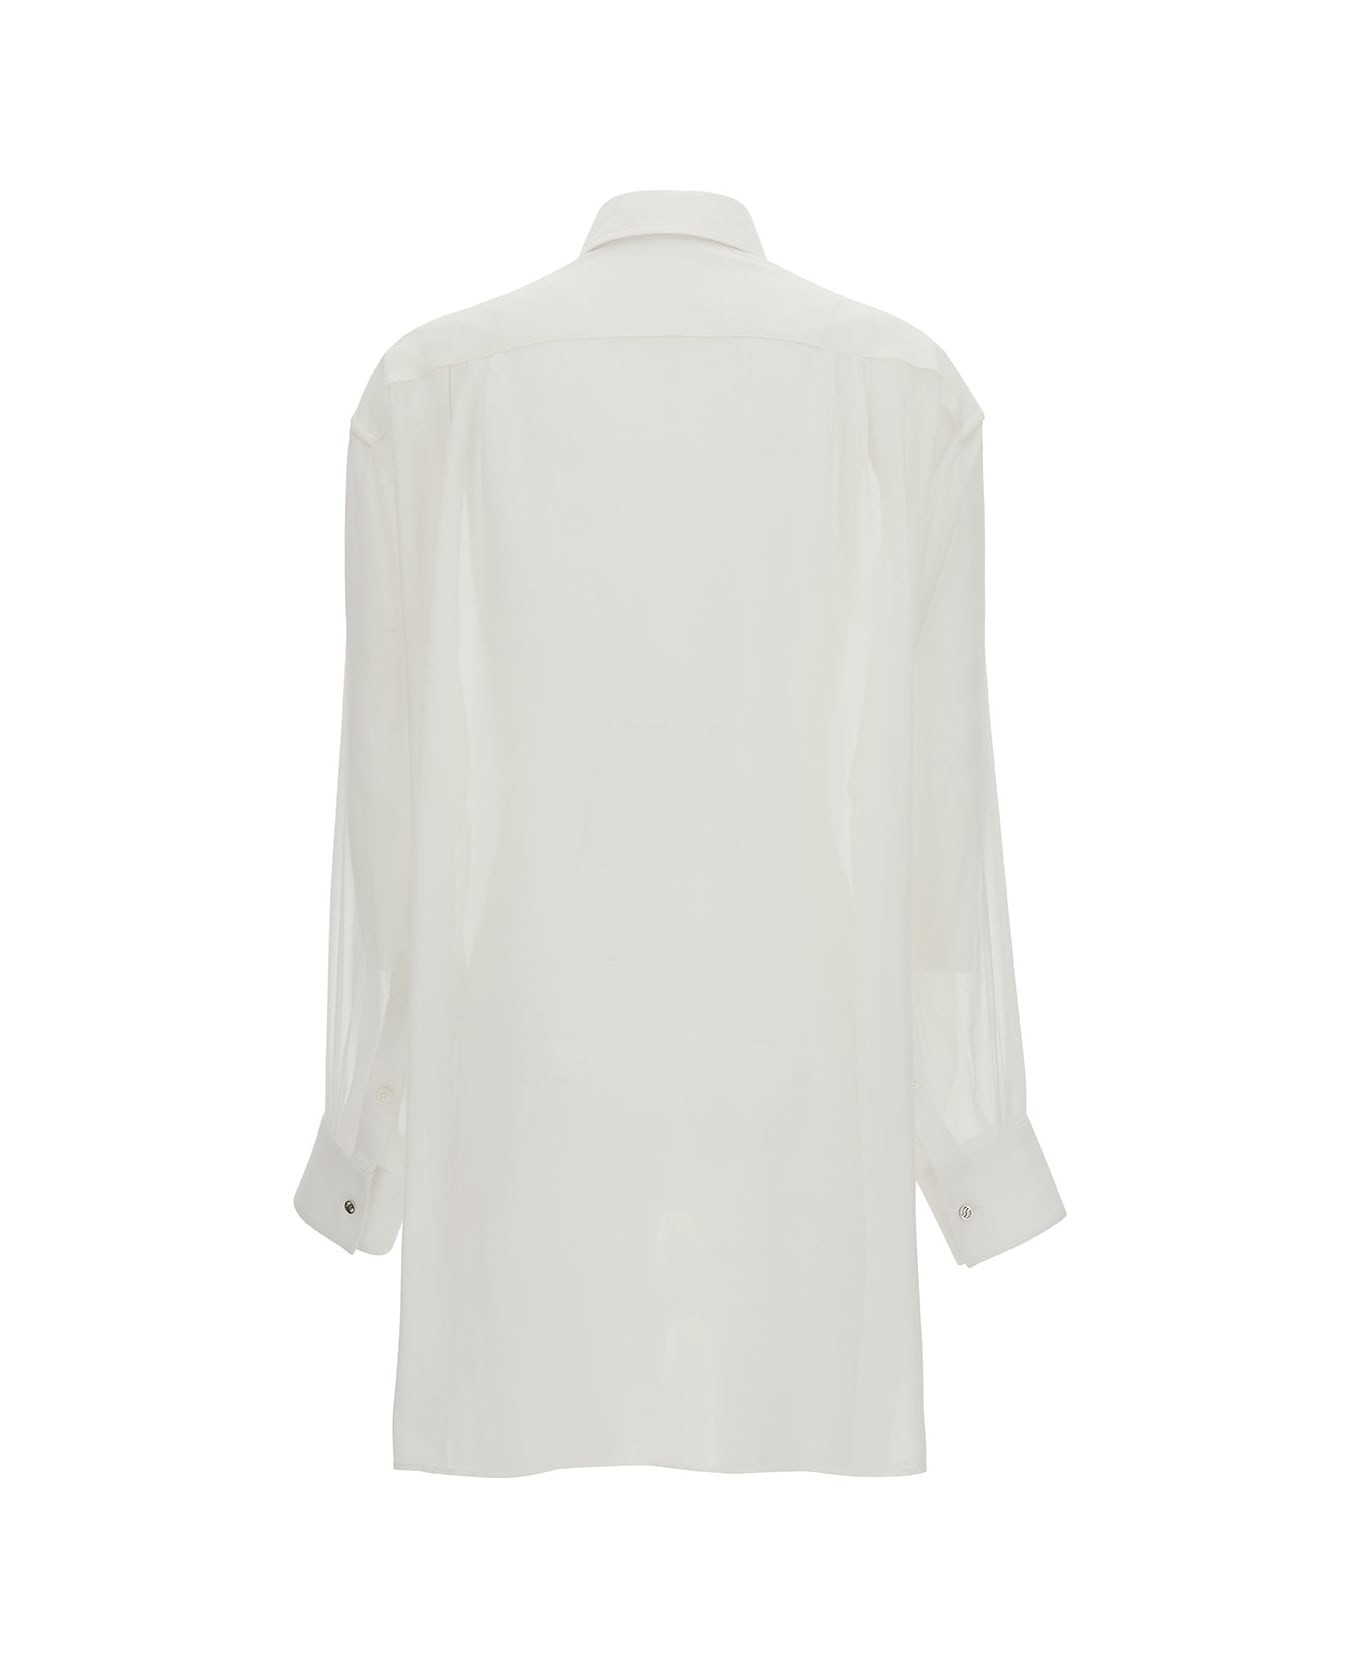 Stella McCartney Oversized White Tuxedo Shirt In Silk Woman - White